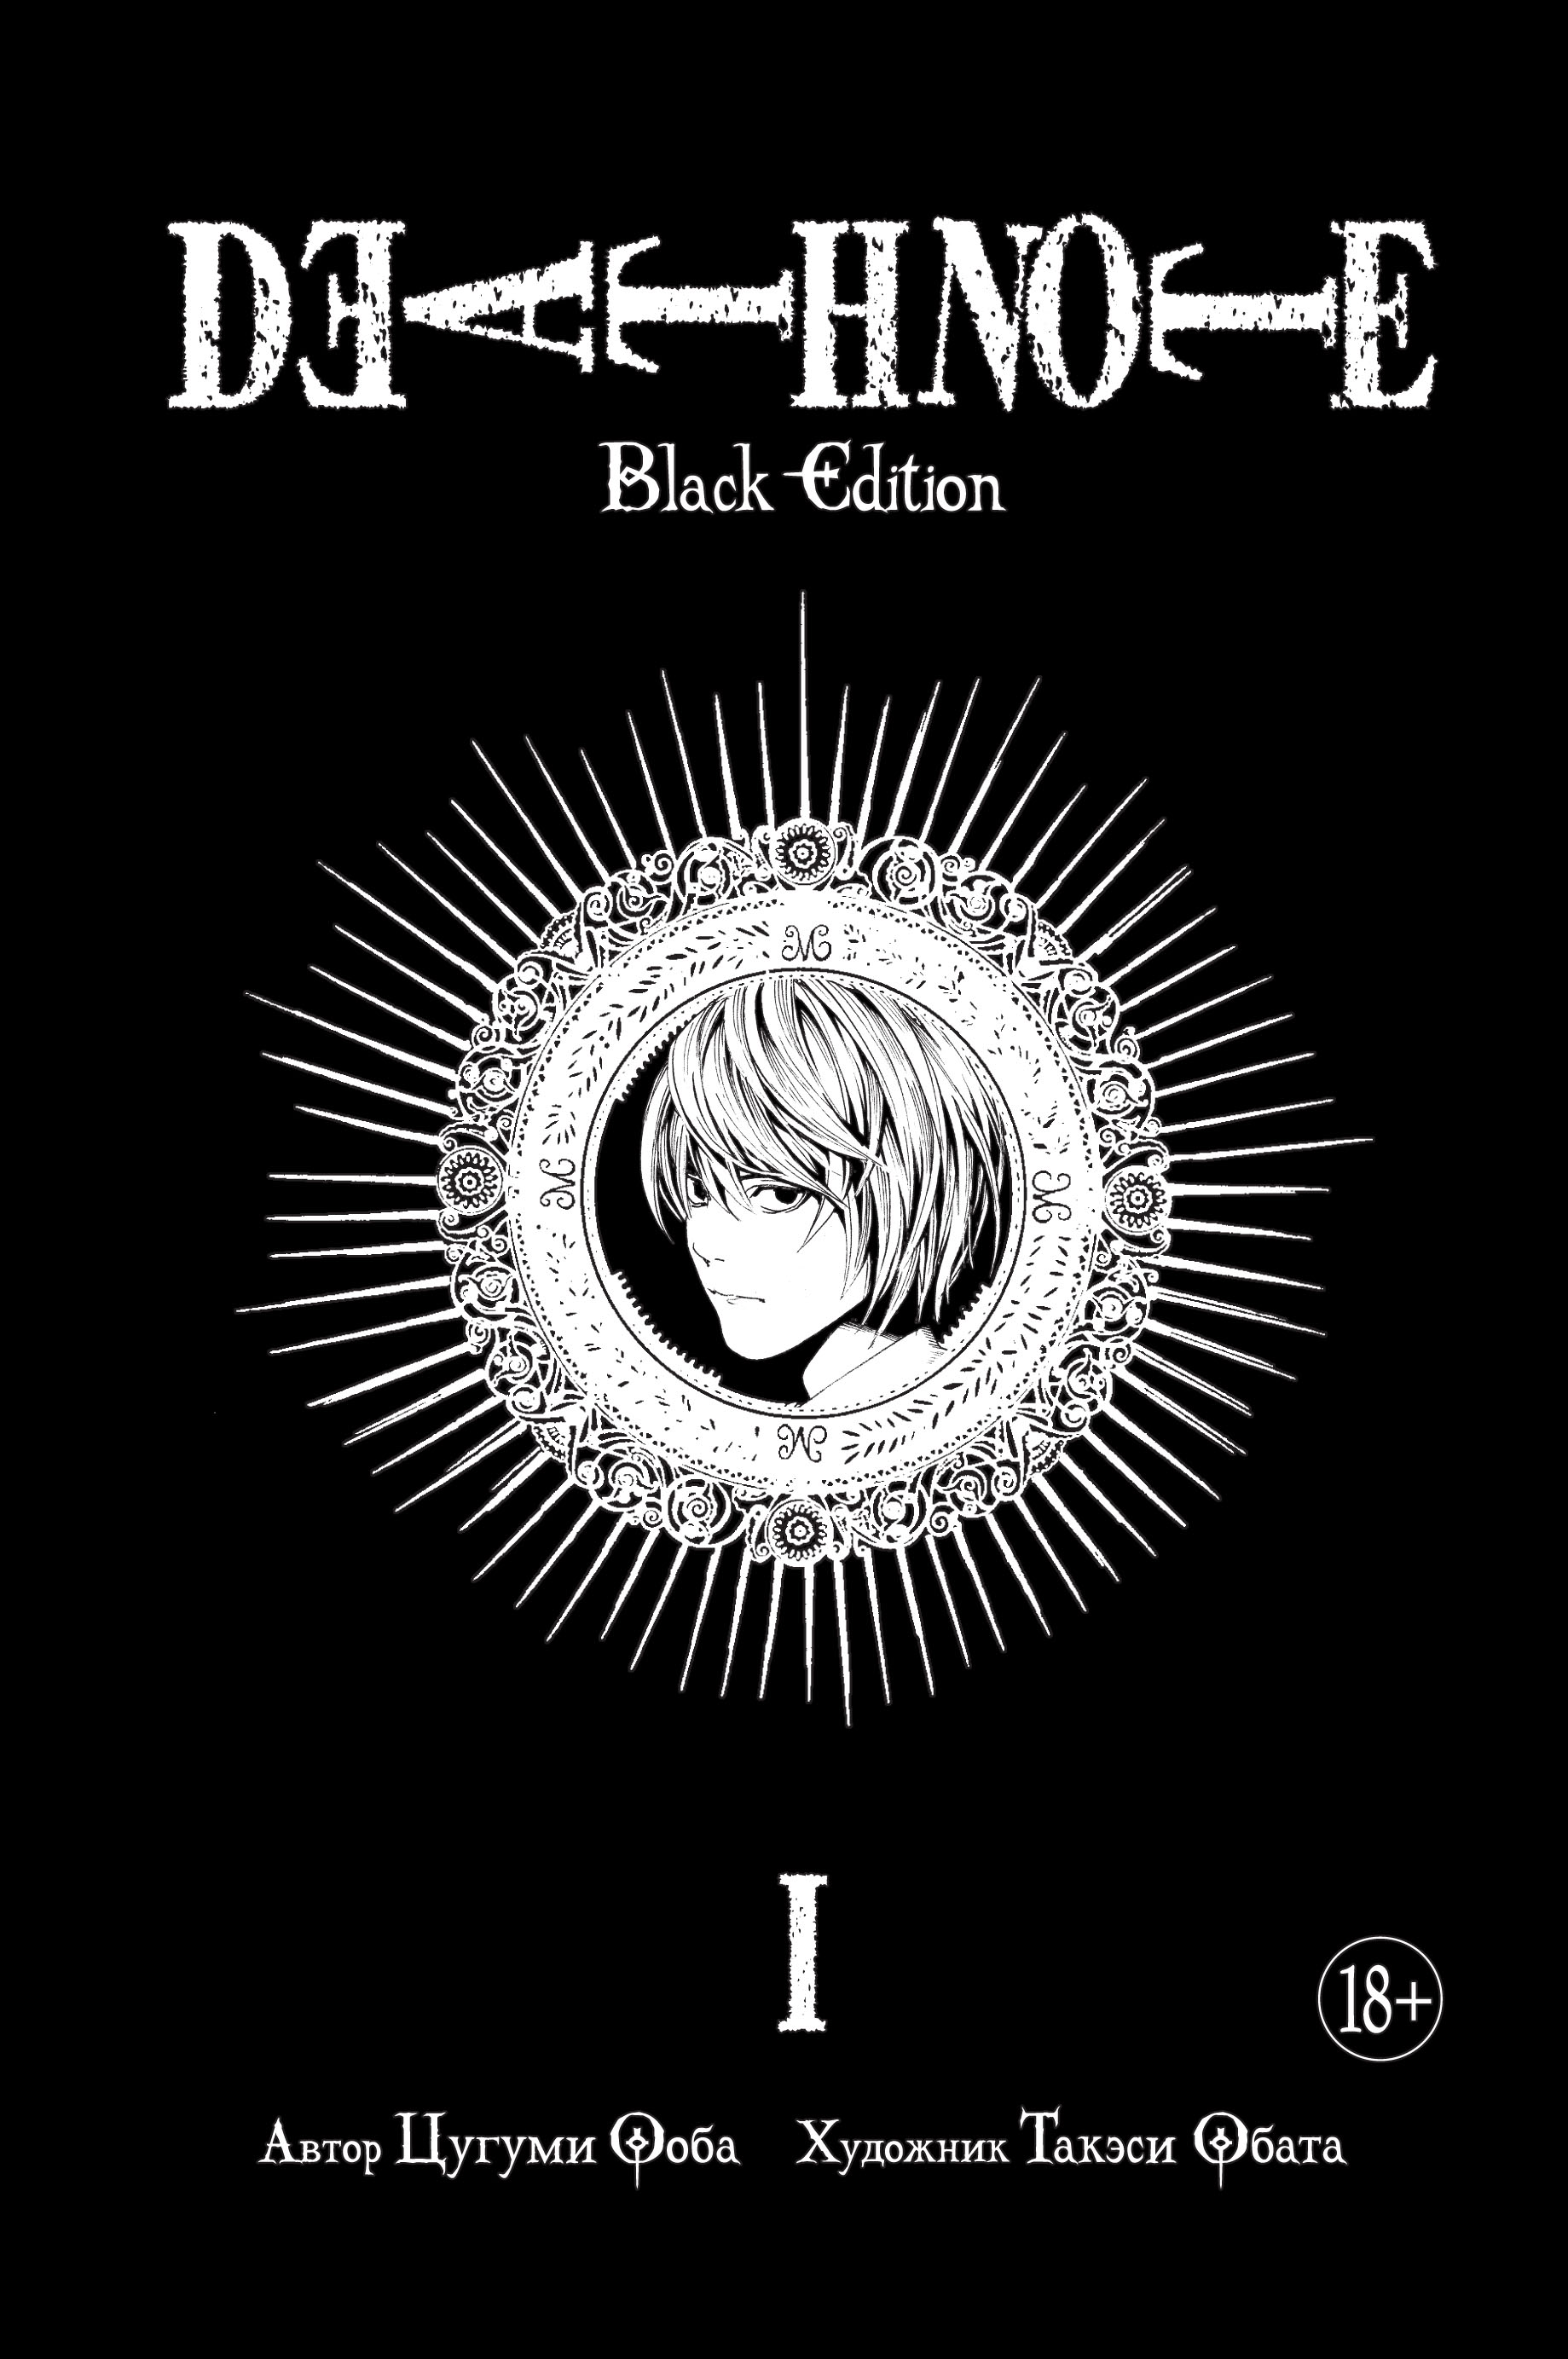 манга азбука death note black edition книга 2 Ооба Цугуми Death Note. Black Edition. Книга 1